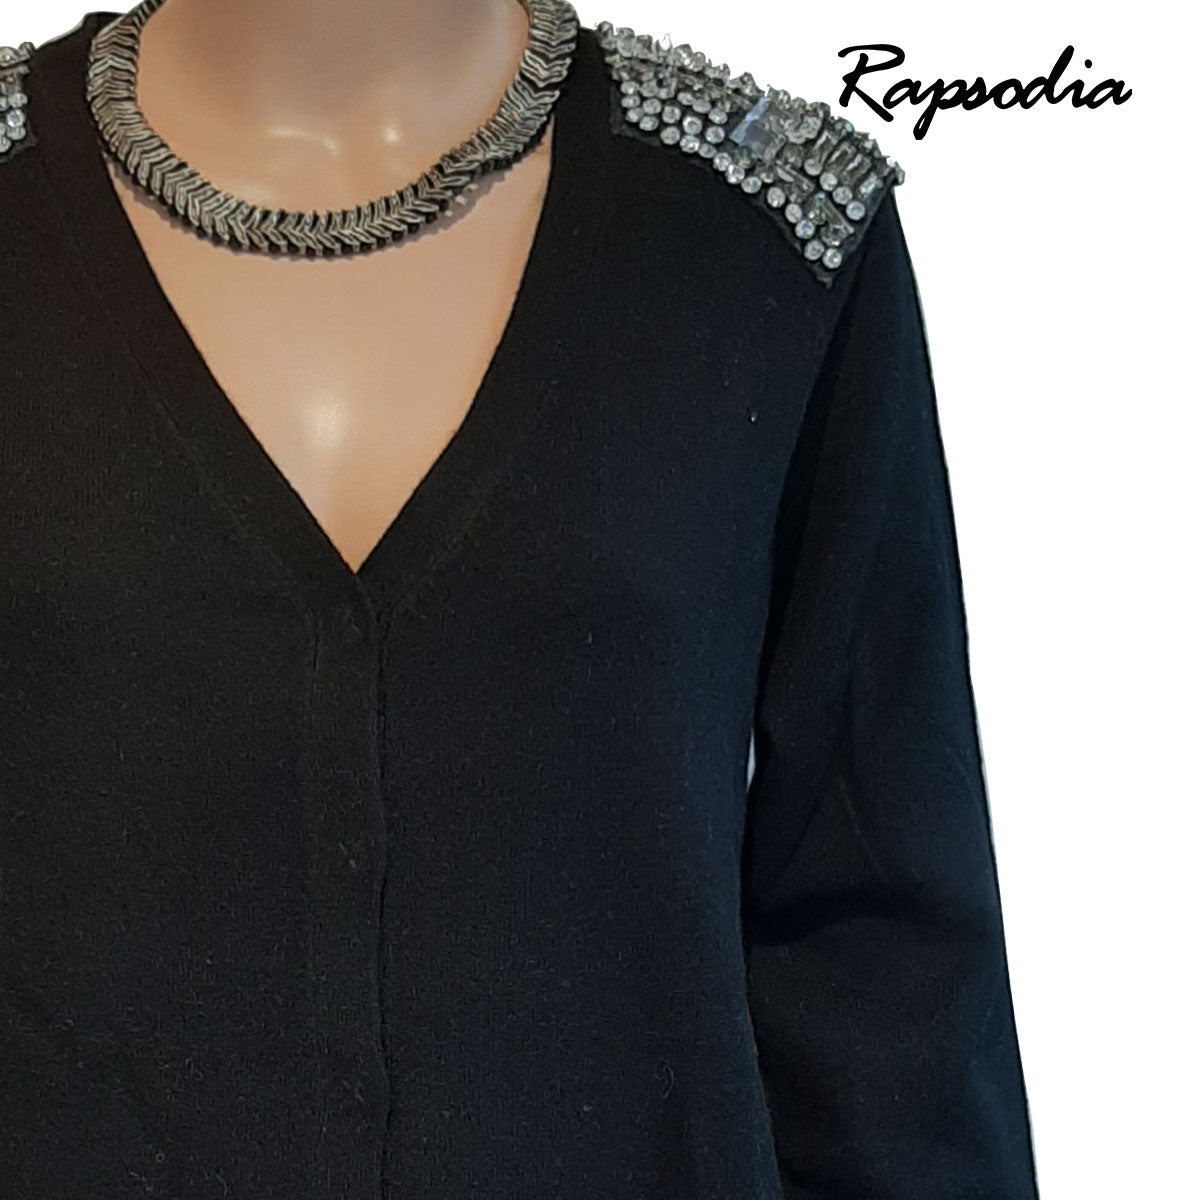 Sweater Rapsodia Tibidabo Negro